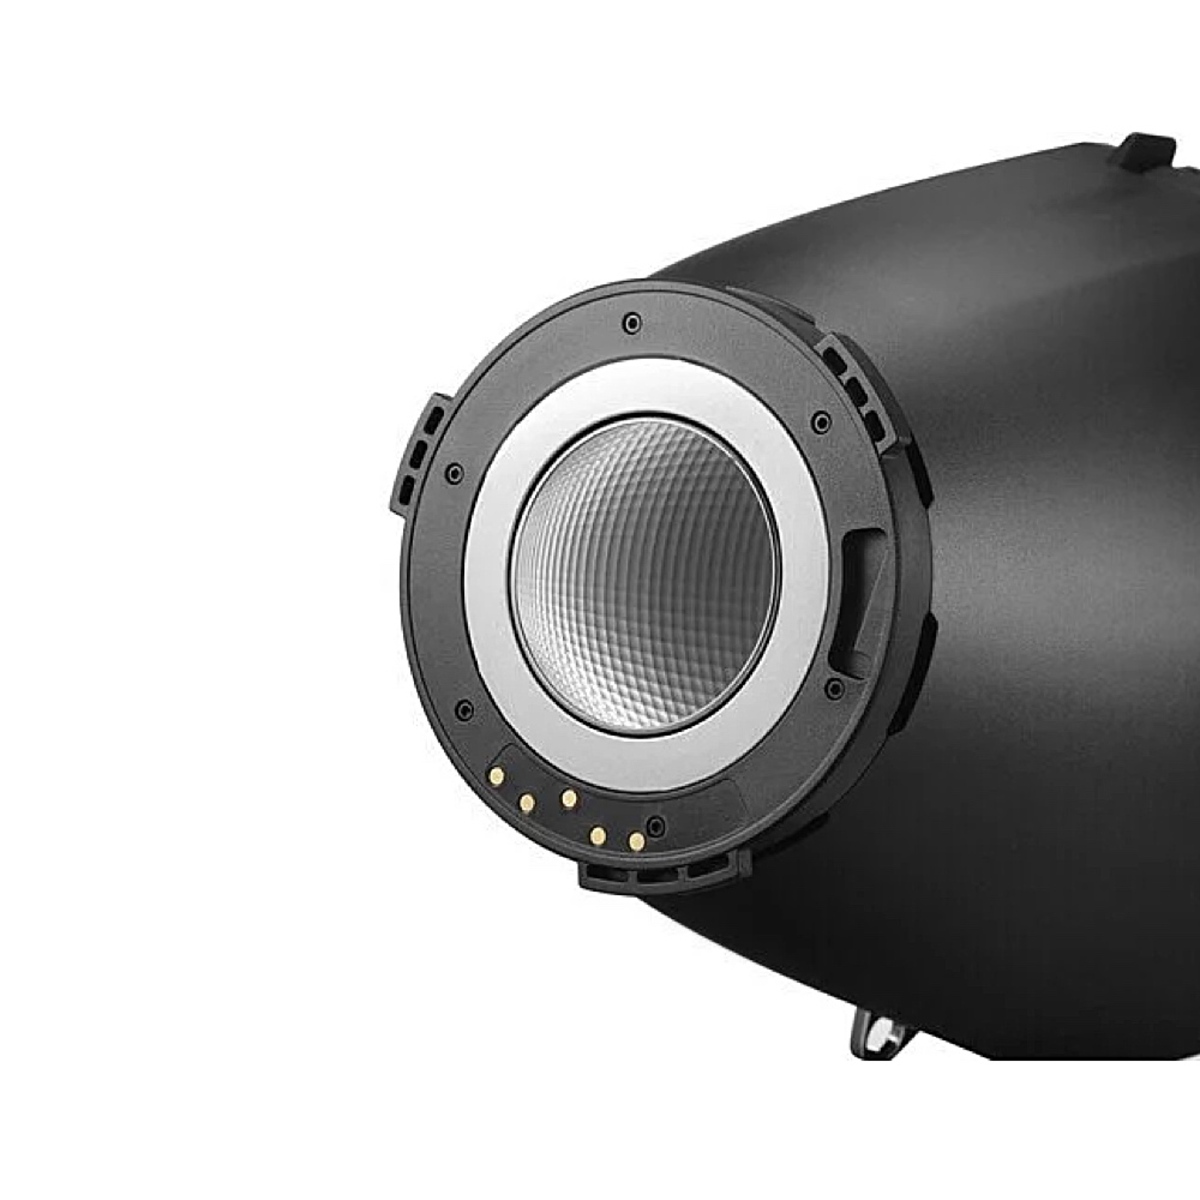 Godox GR15 Reflector for KNOWLED MG1200Bi LED Light (15°)